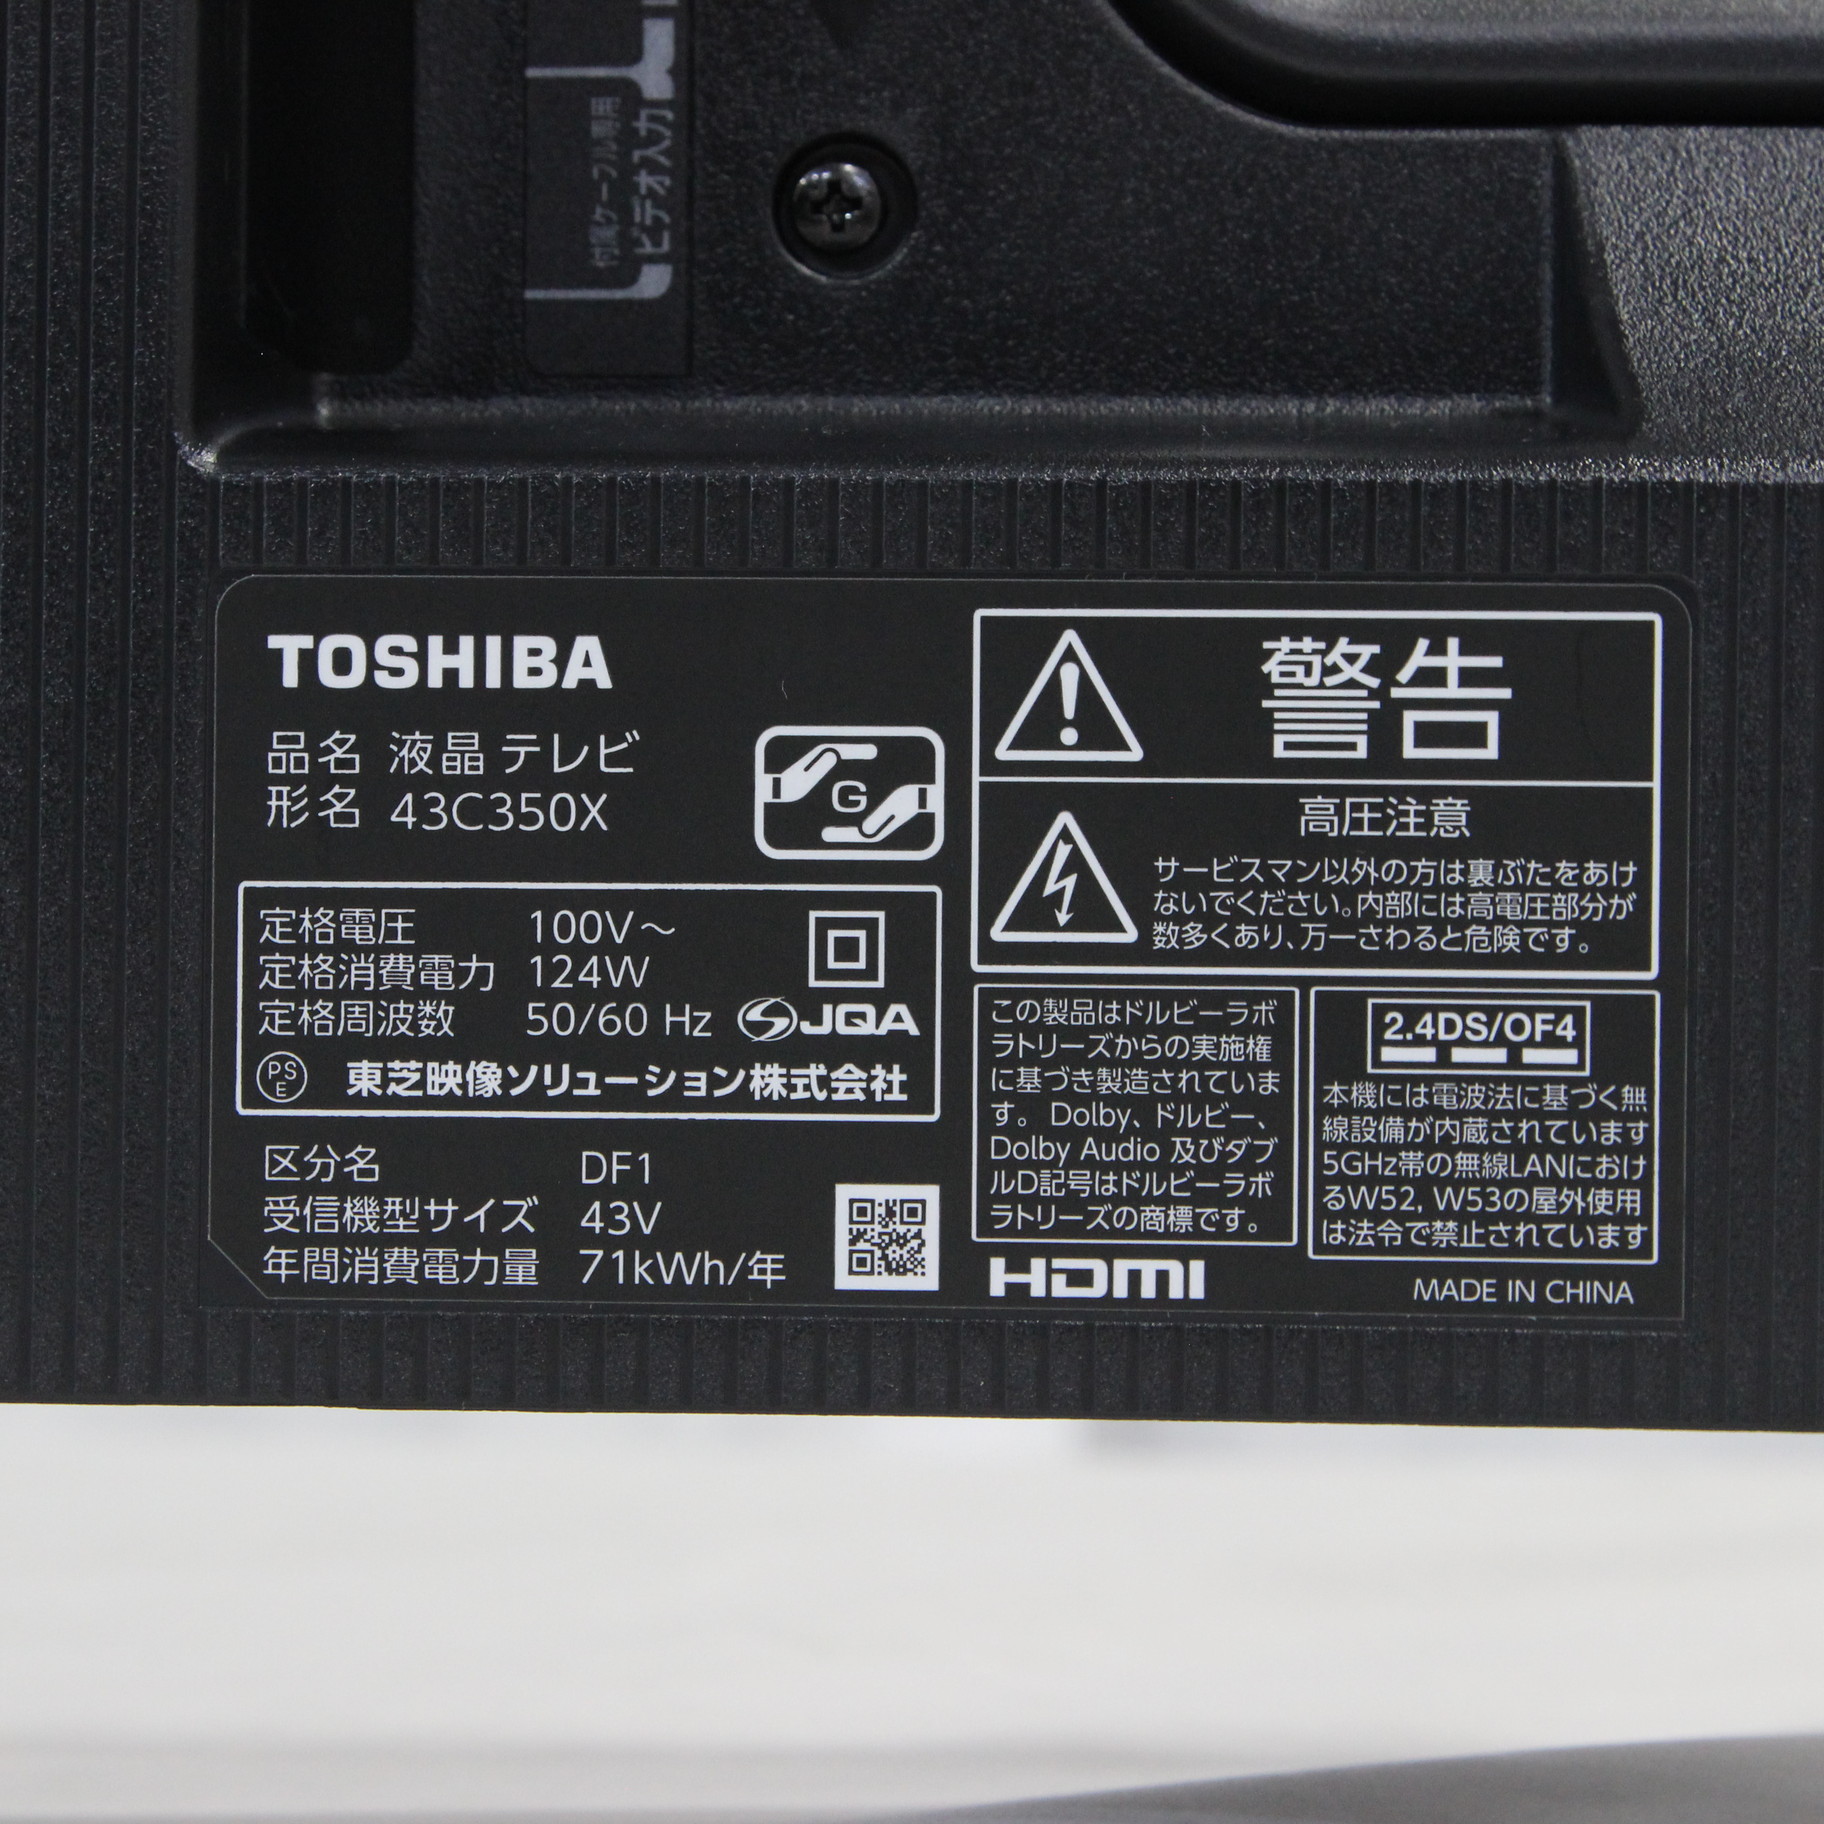 TOSHIBA 43C350X BLACK-